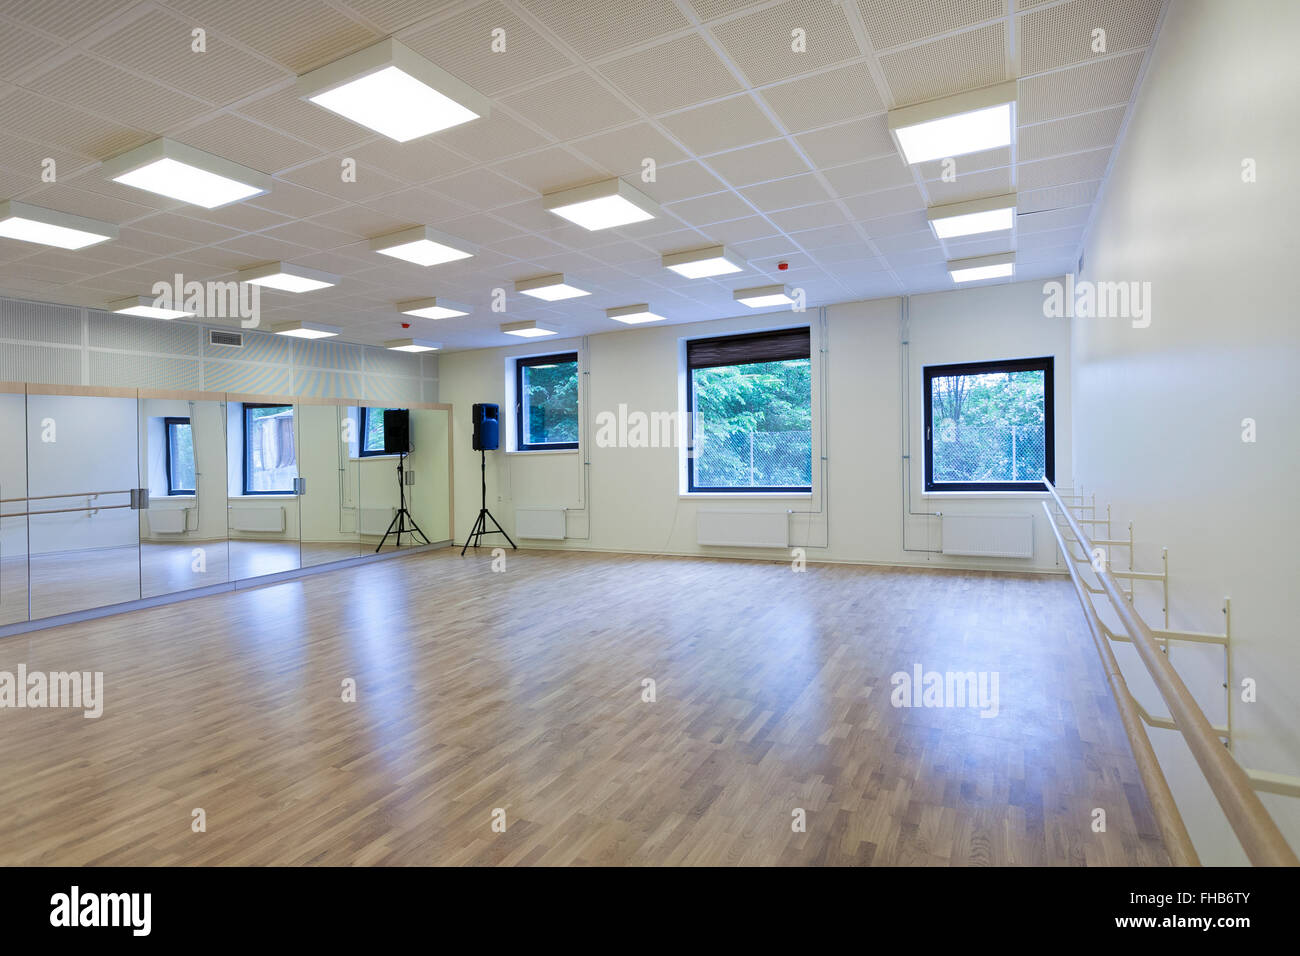 Estonia, Tartu, Heino Eller's Music school, empty class room Stock Photo